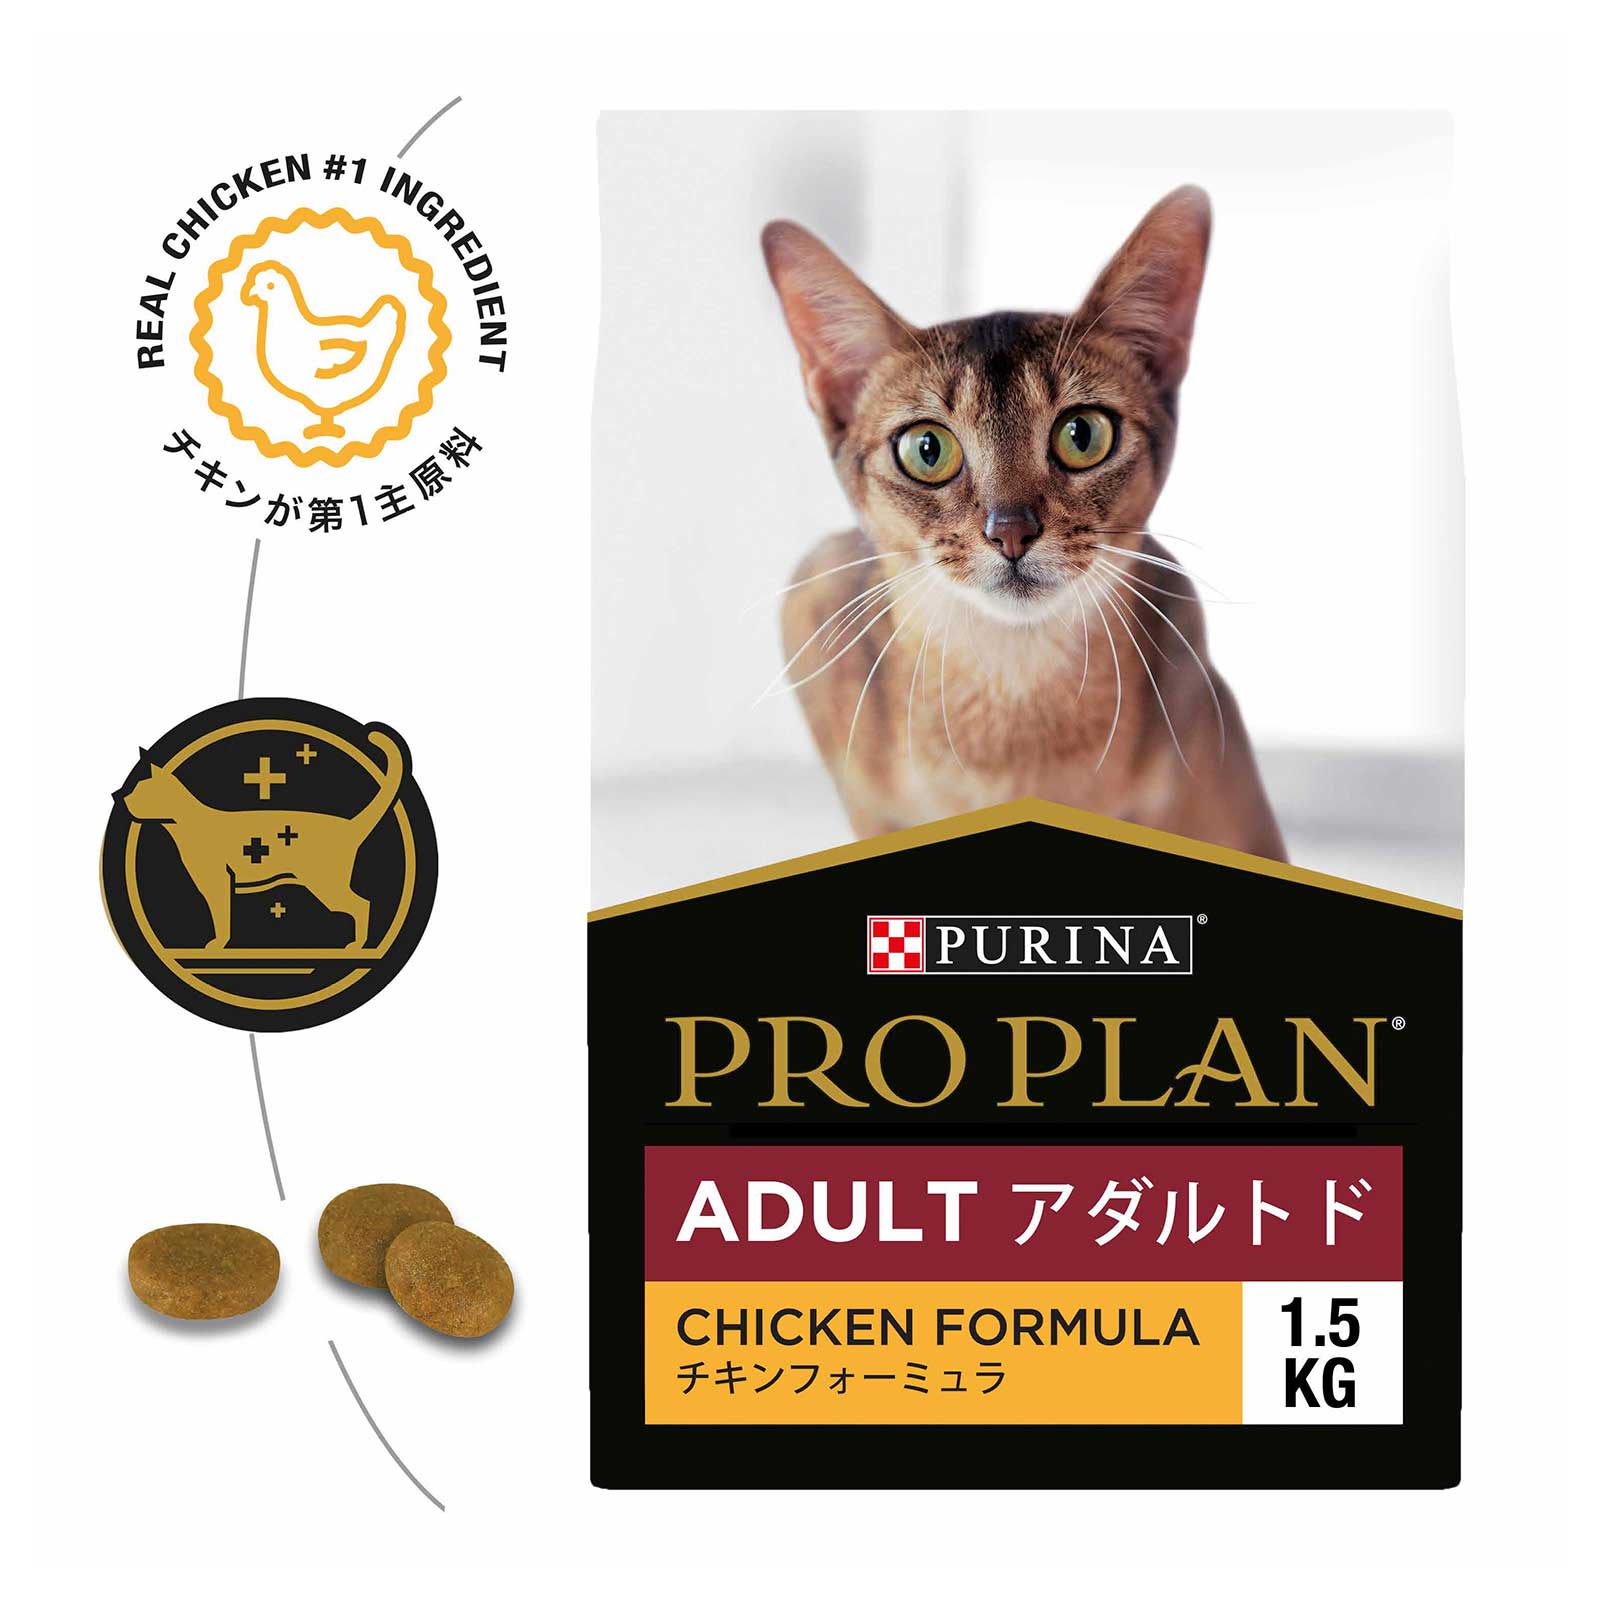 Pro Plan Cat Food Adult Chicken